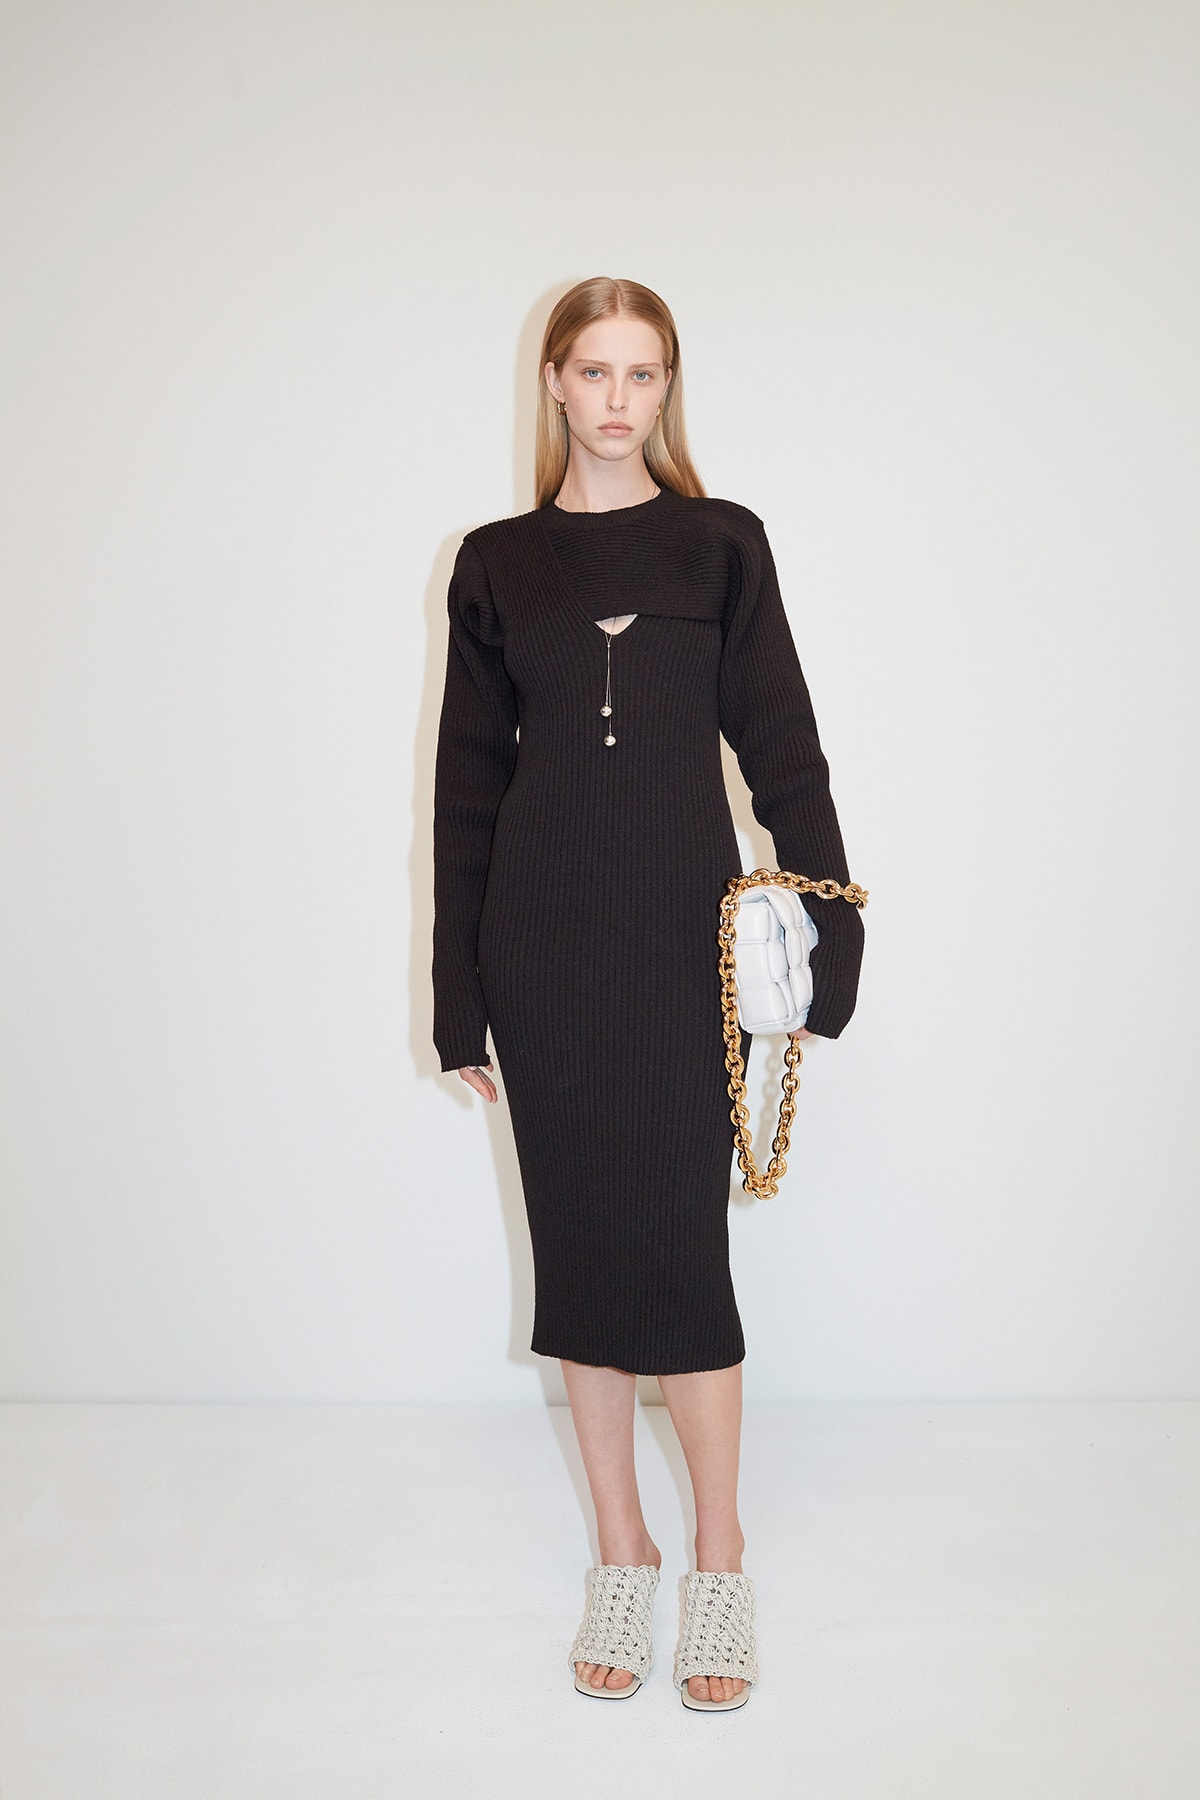 Bottega Veneta Pre-Fall 2020 Collection Lookbook Midi Dress Black